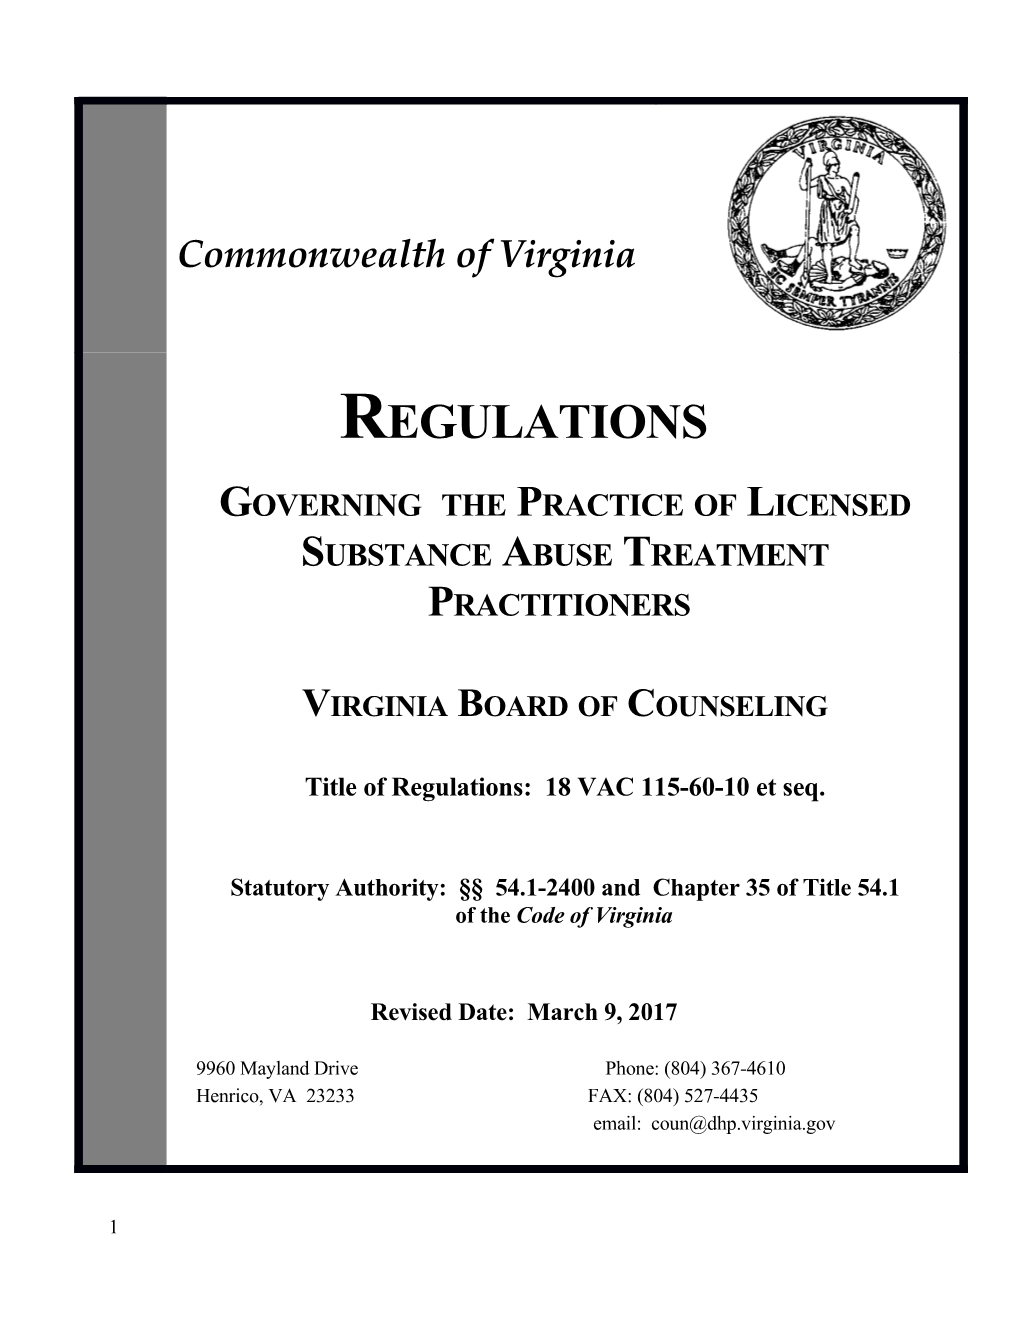 Virginia Administrative Code